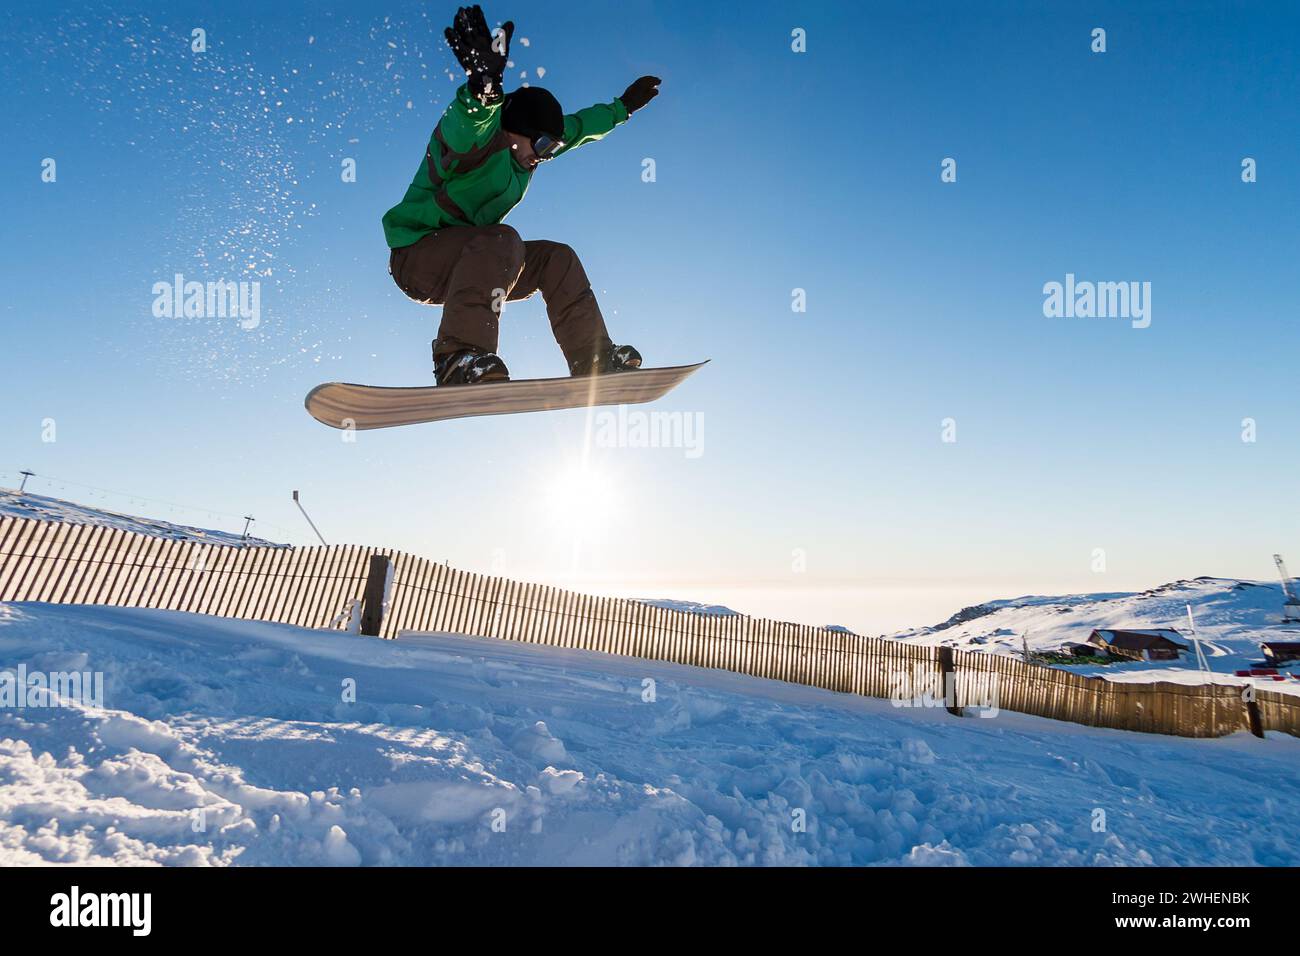 Snowboarder at jump Stock Photo